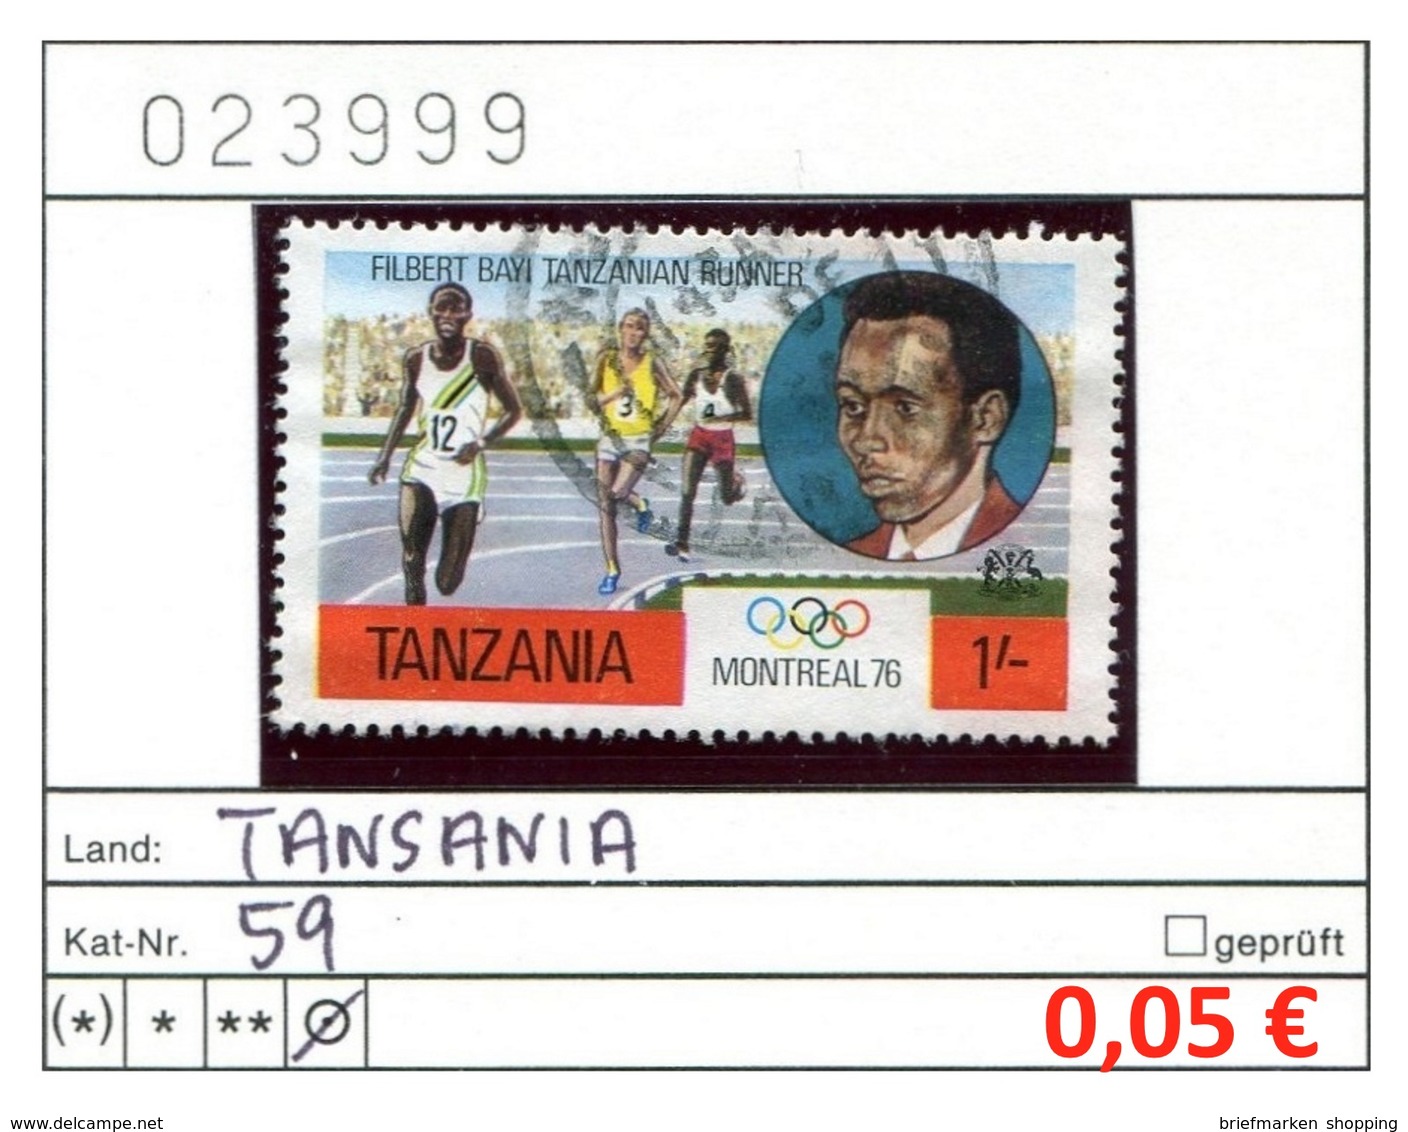 Tansania - Tanzania - 10 diff. as per scans - oo oblit. used gebruikt -